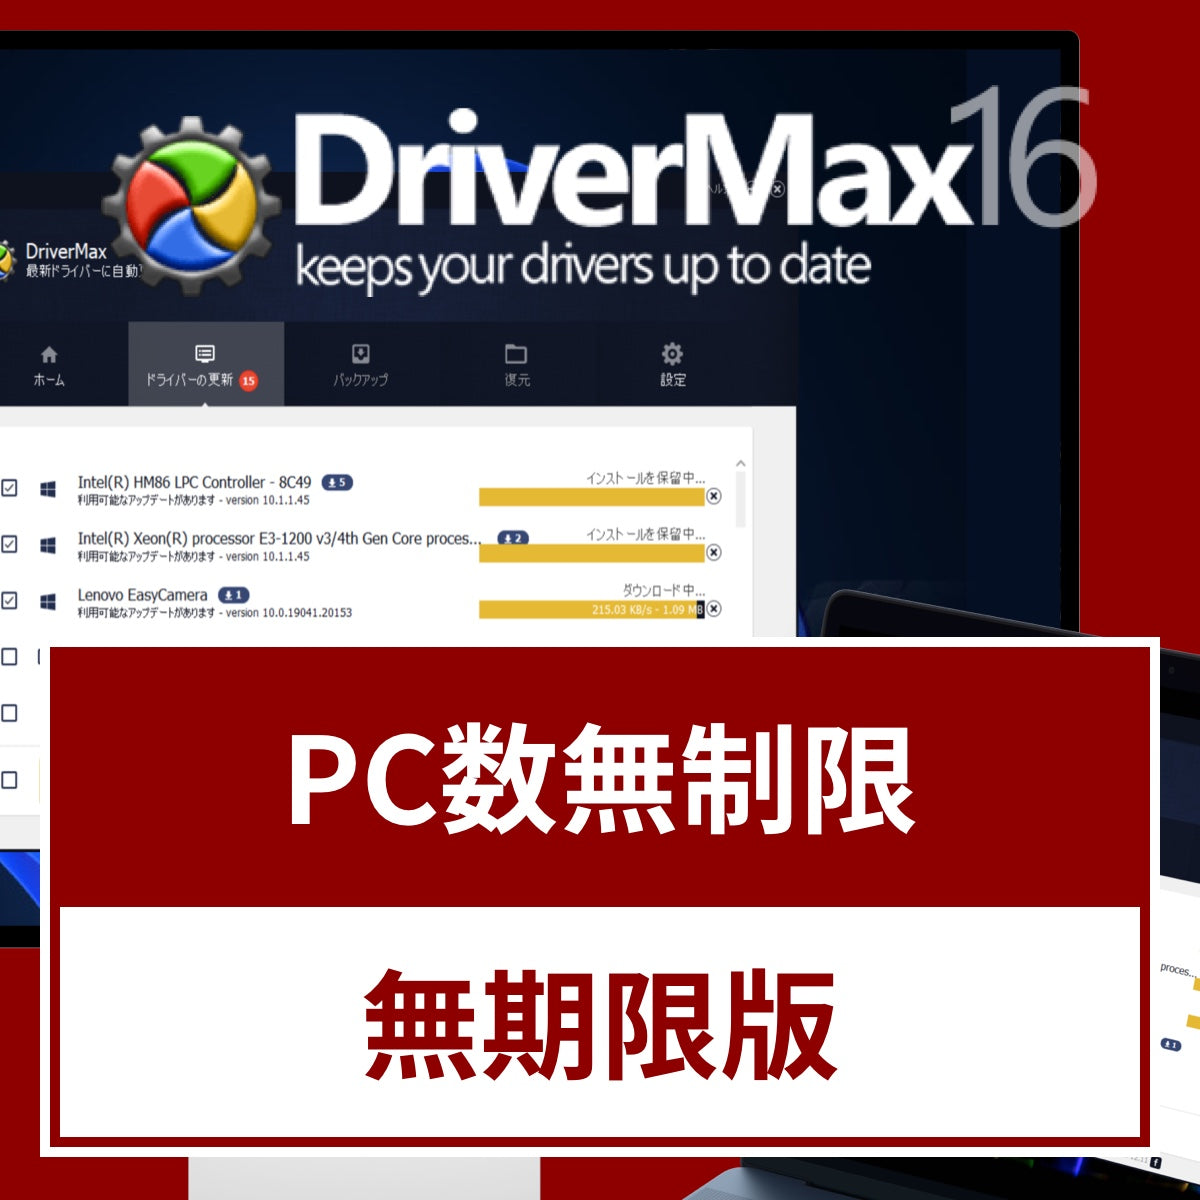 DriverMax 16 PC台数制限なし/無期限版